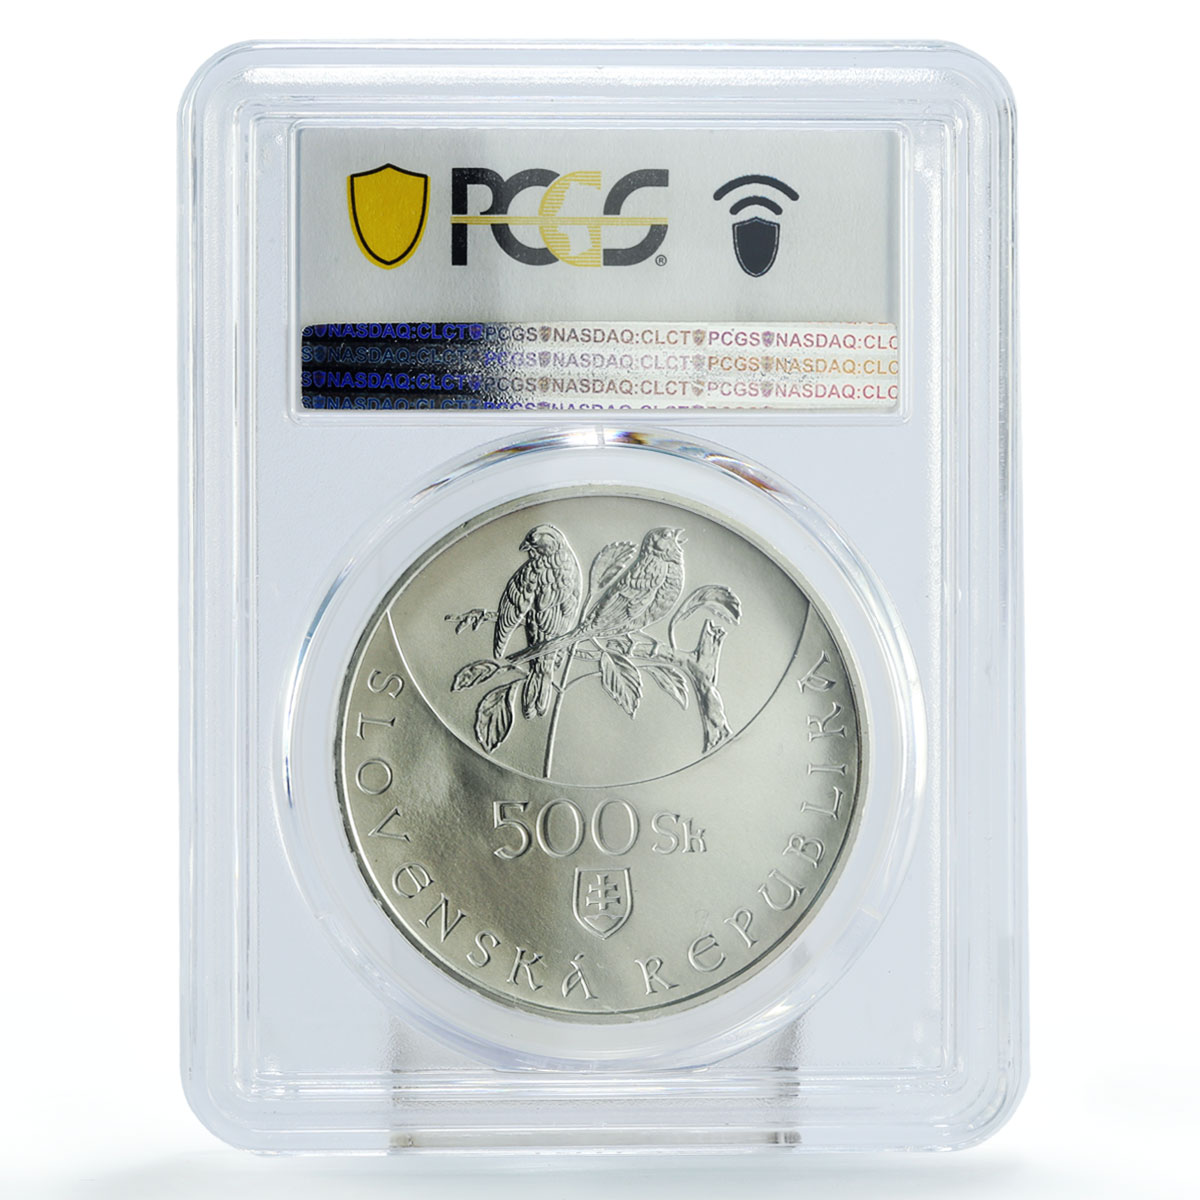 Slovakia 500 korun Kras National Park Two Birds Fauna MS69 PCGS silver coin 2005